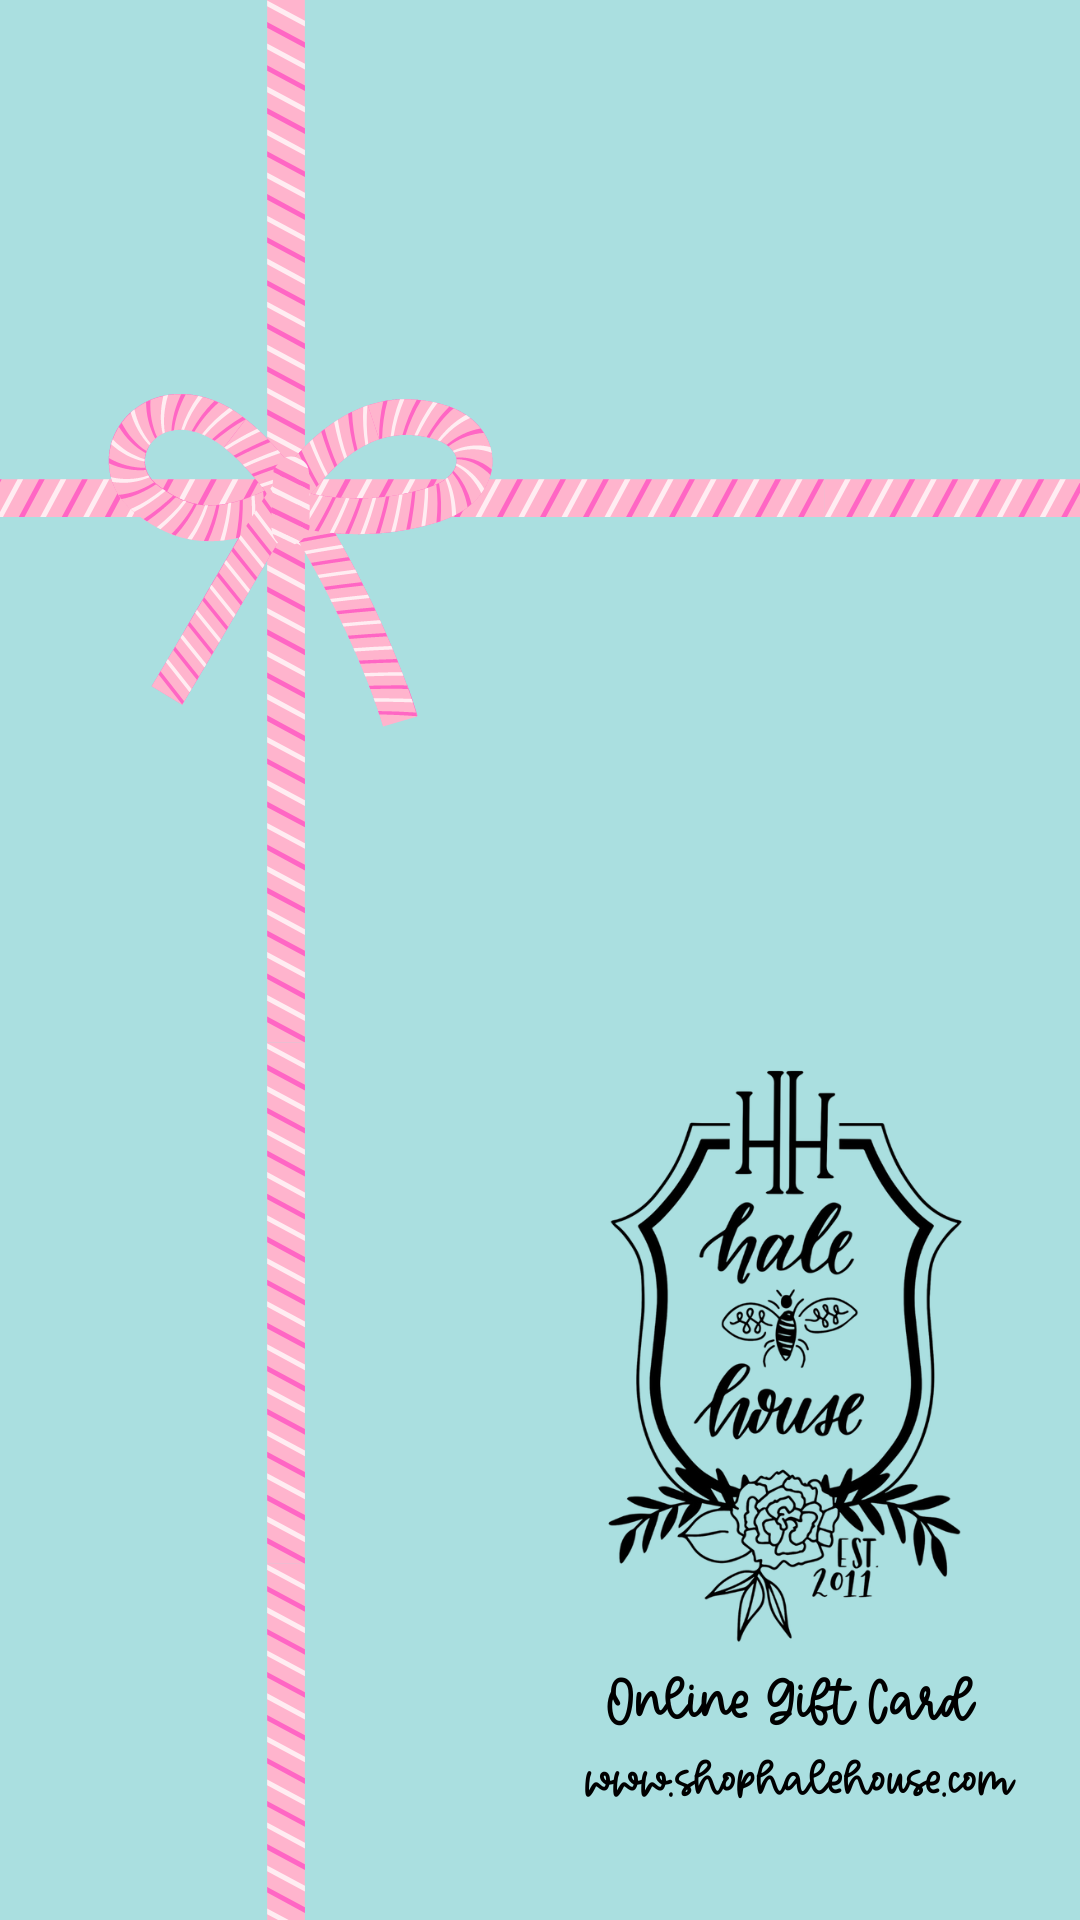 Hale House Online Gift Card — Hale House Boutique